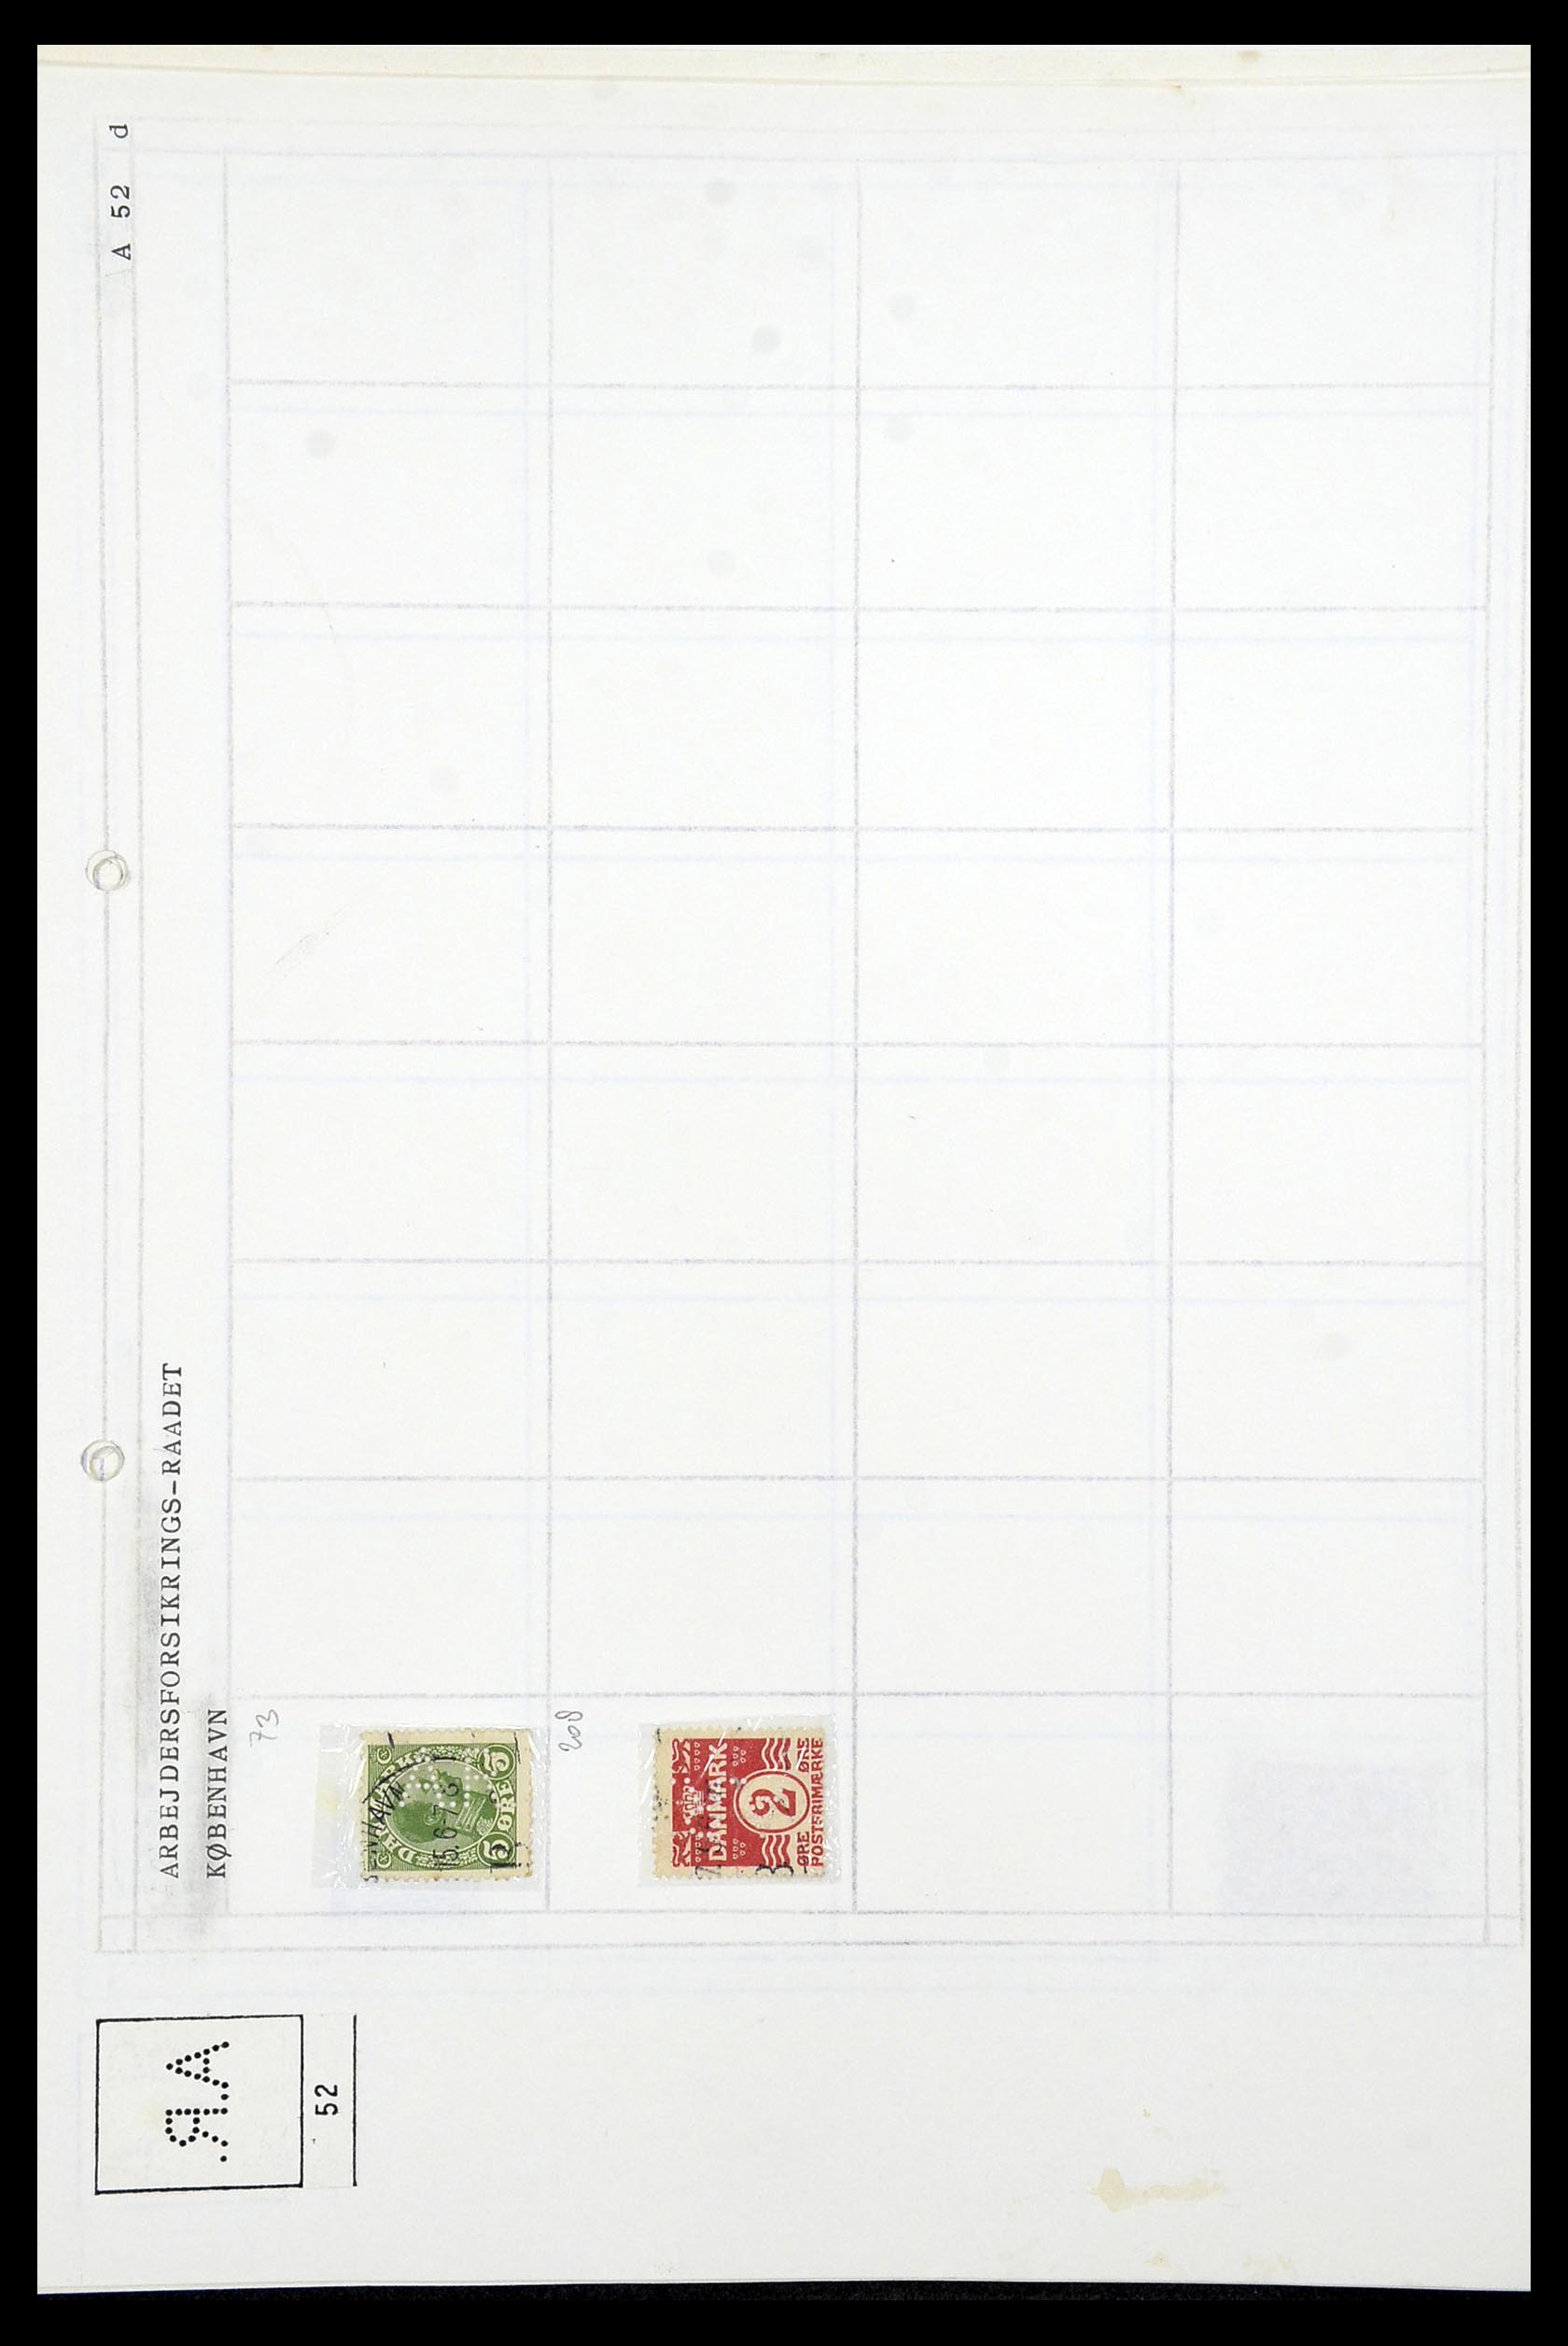 34415 016 - Stamp Collection 34415 Denmark perfins 1875-1980.